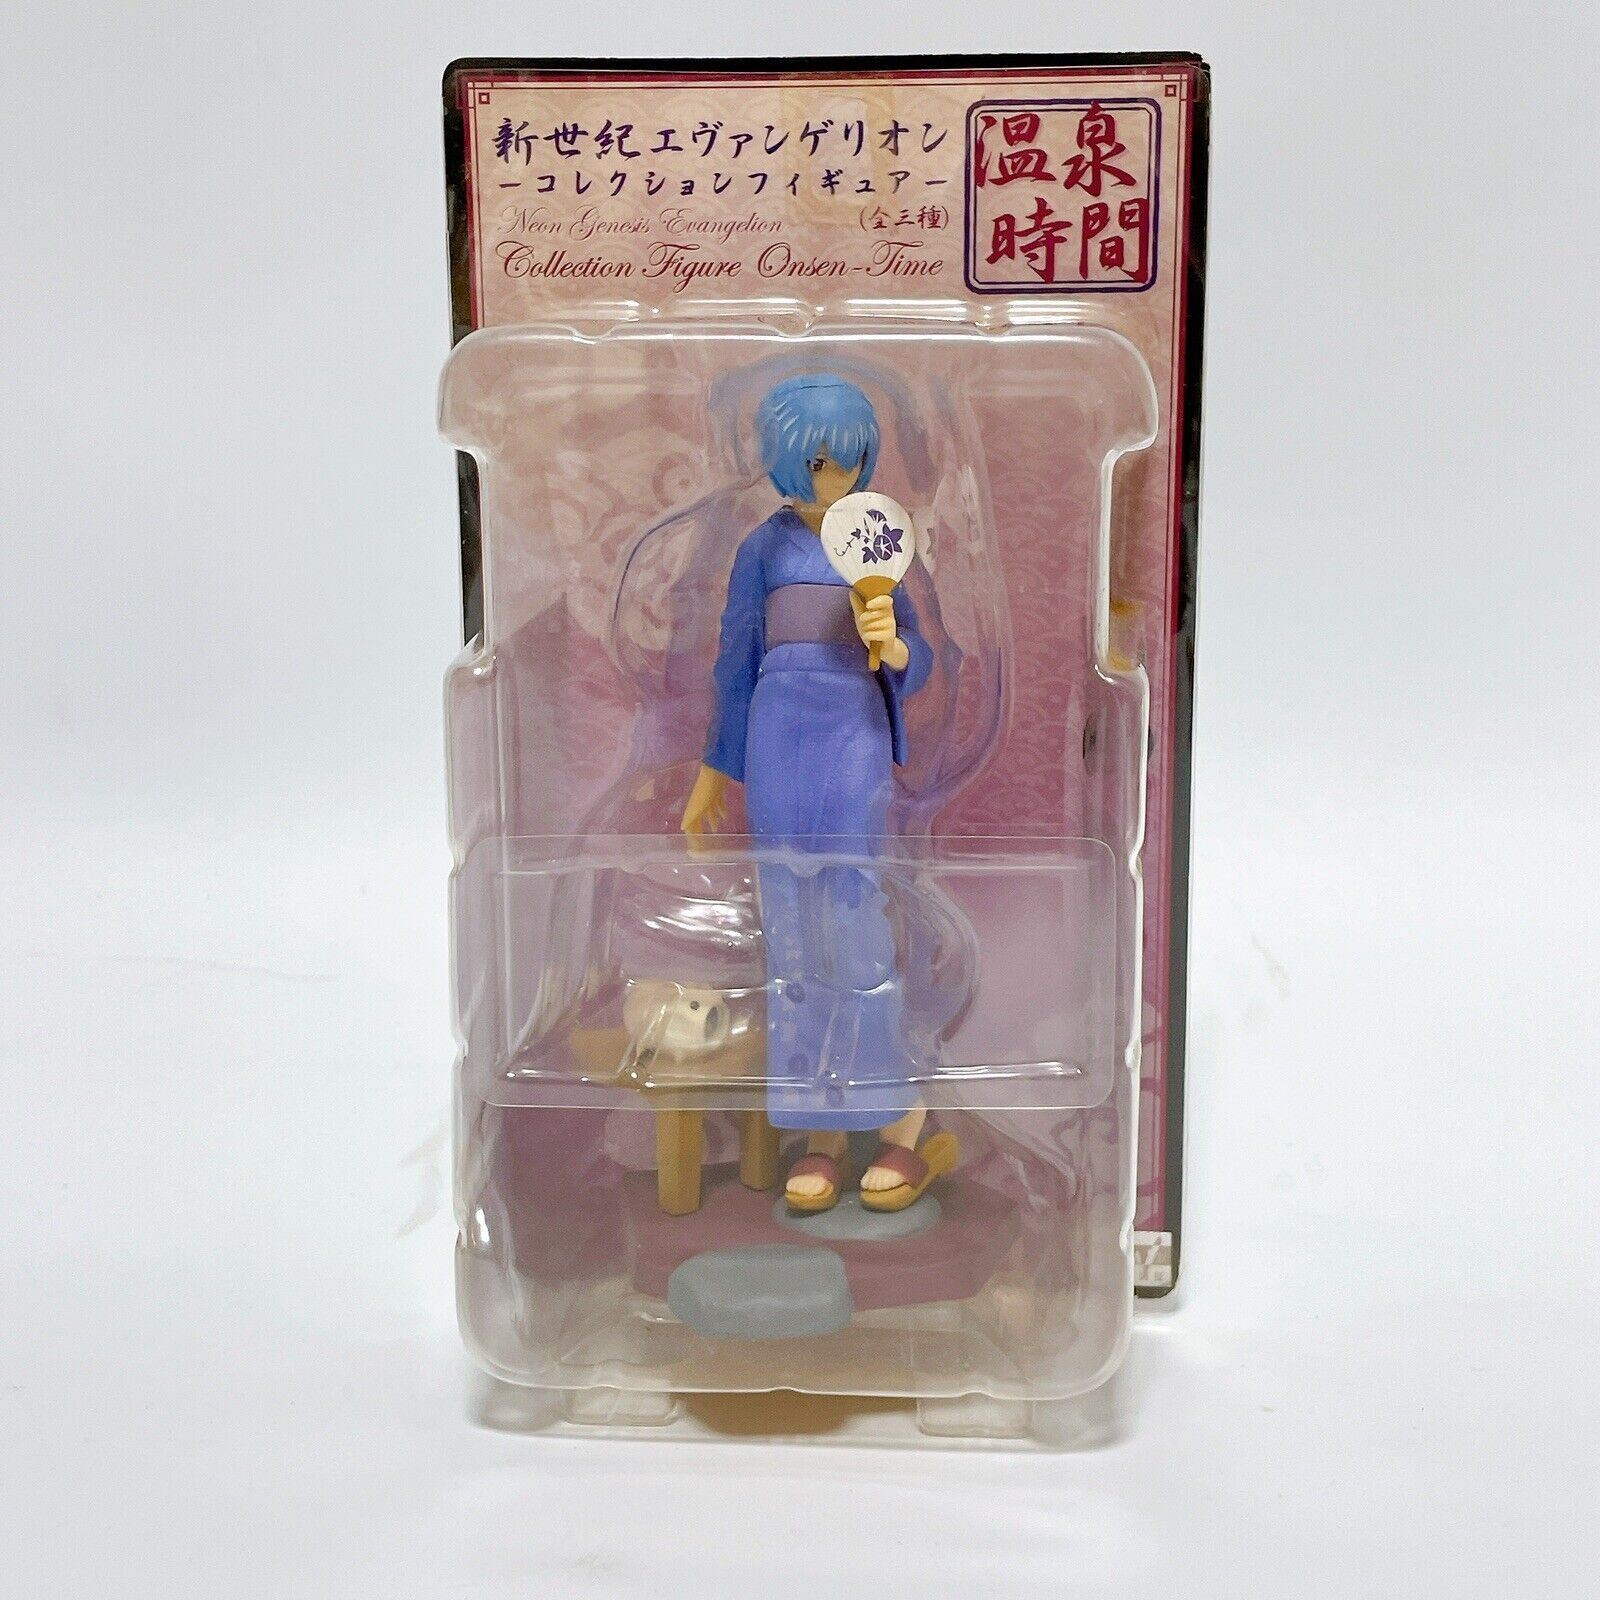 Neon Genesis Evangelion collection figure Onsen Jikan Rei Ayanami SEGA